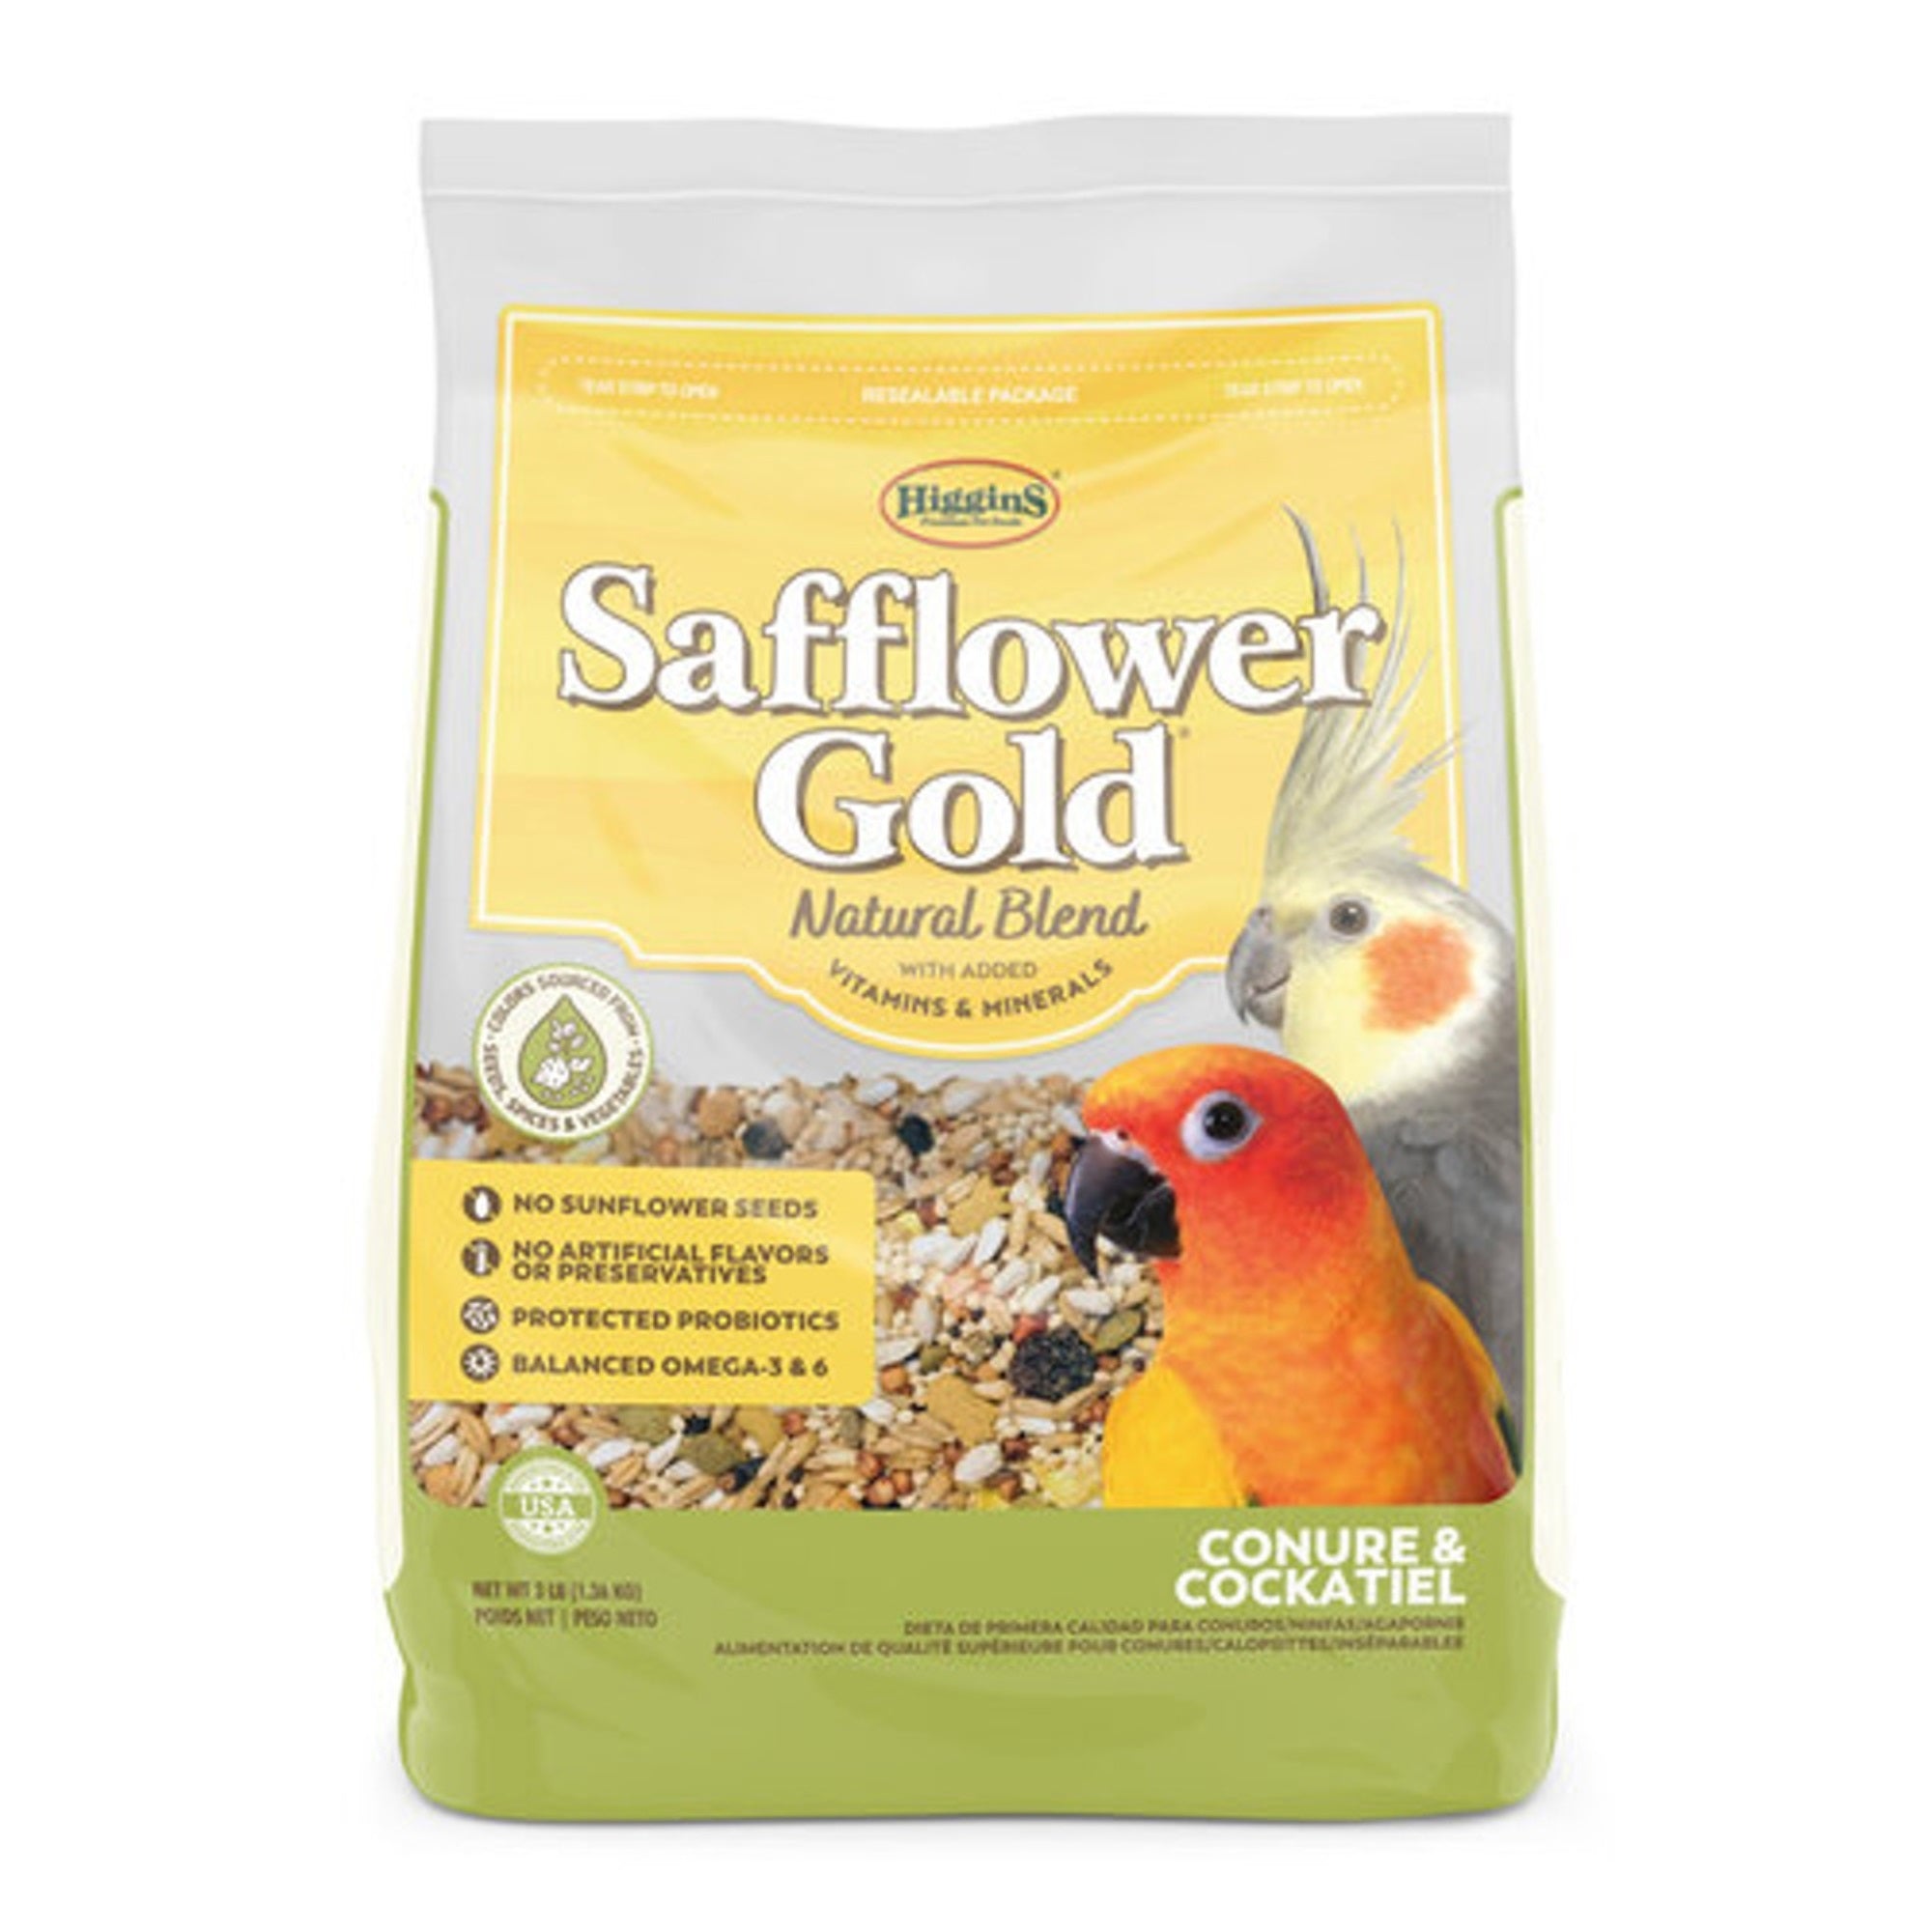 Higgins Safflower Gold Conure and Cockatiel Bird Food, 25-pound bag